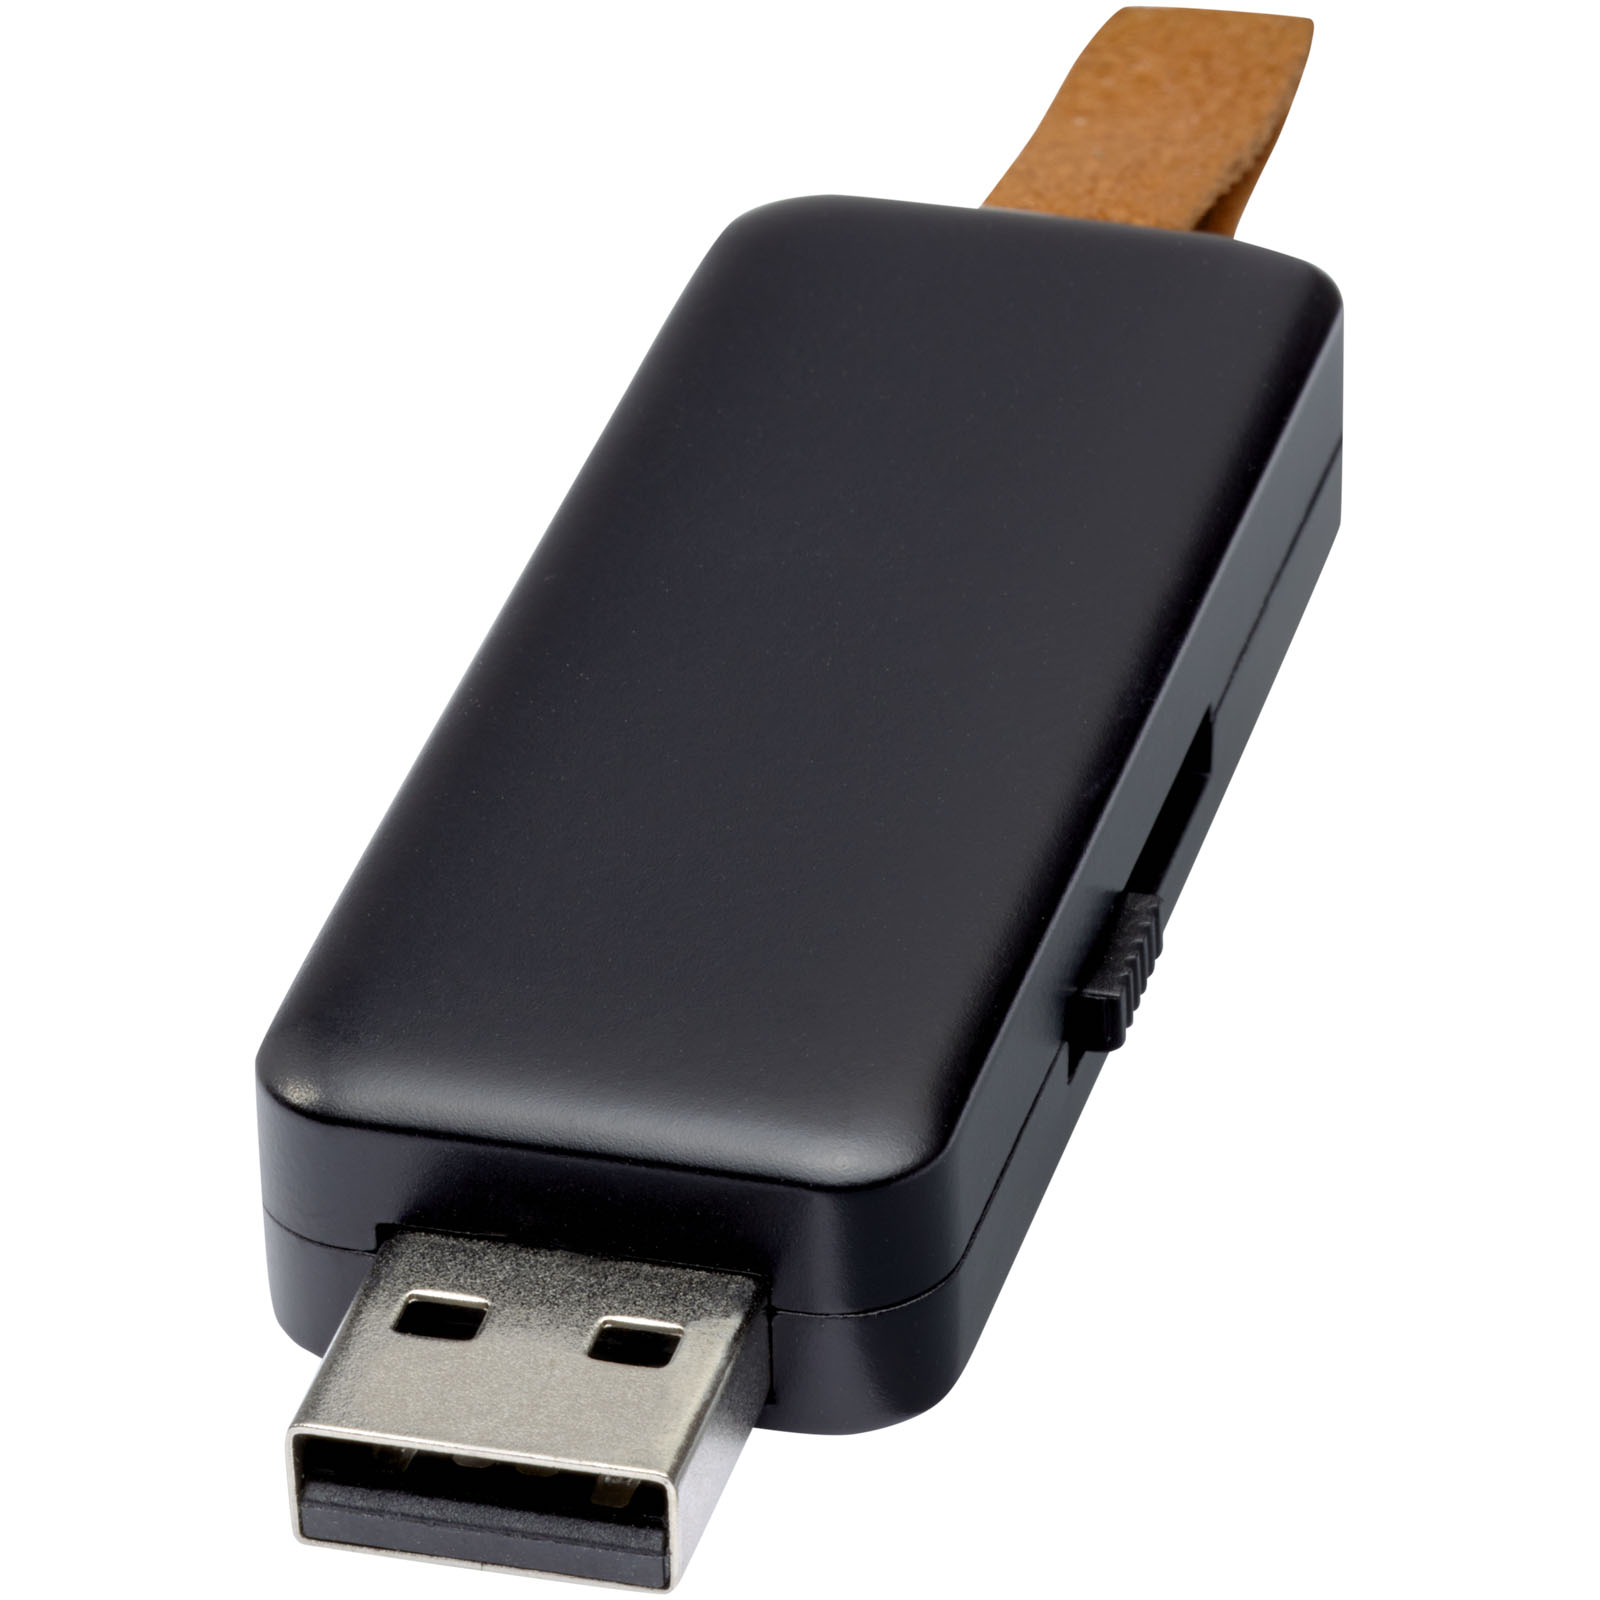 Clés USB publicitaires - Clé USB lumineuse Gleam 4 Go